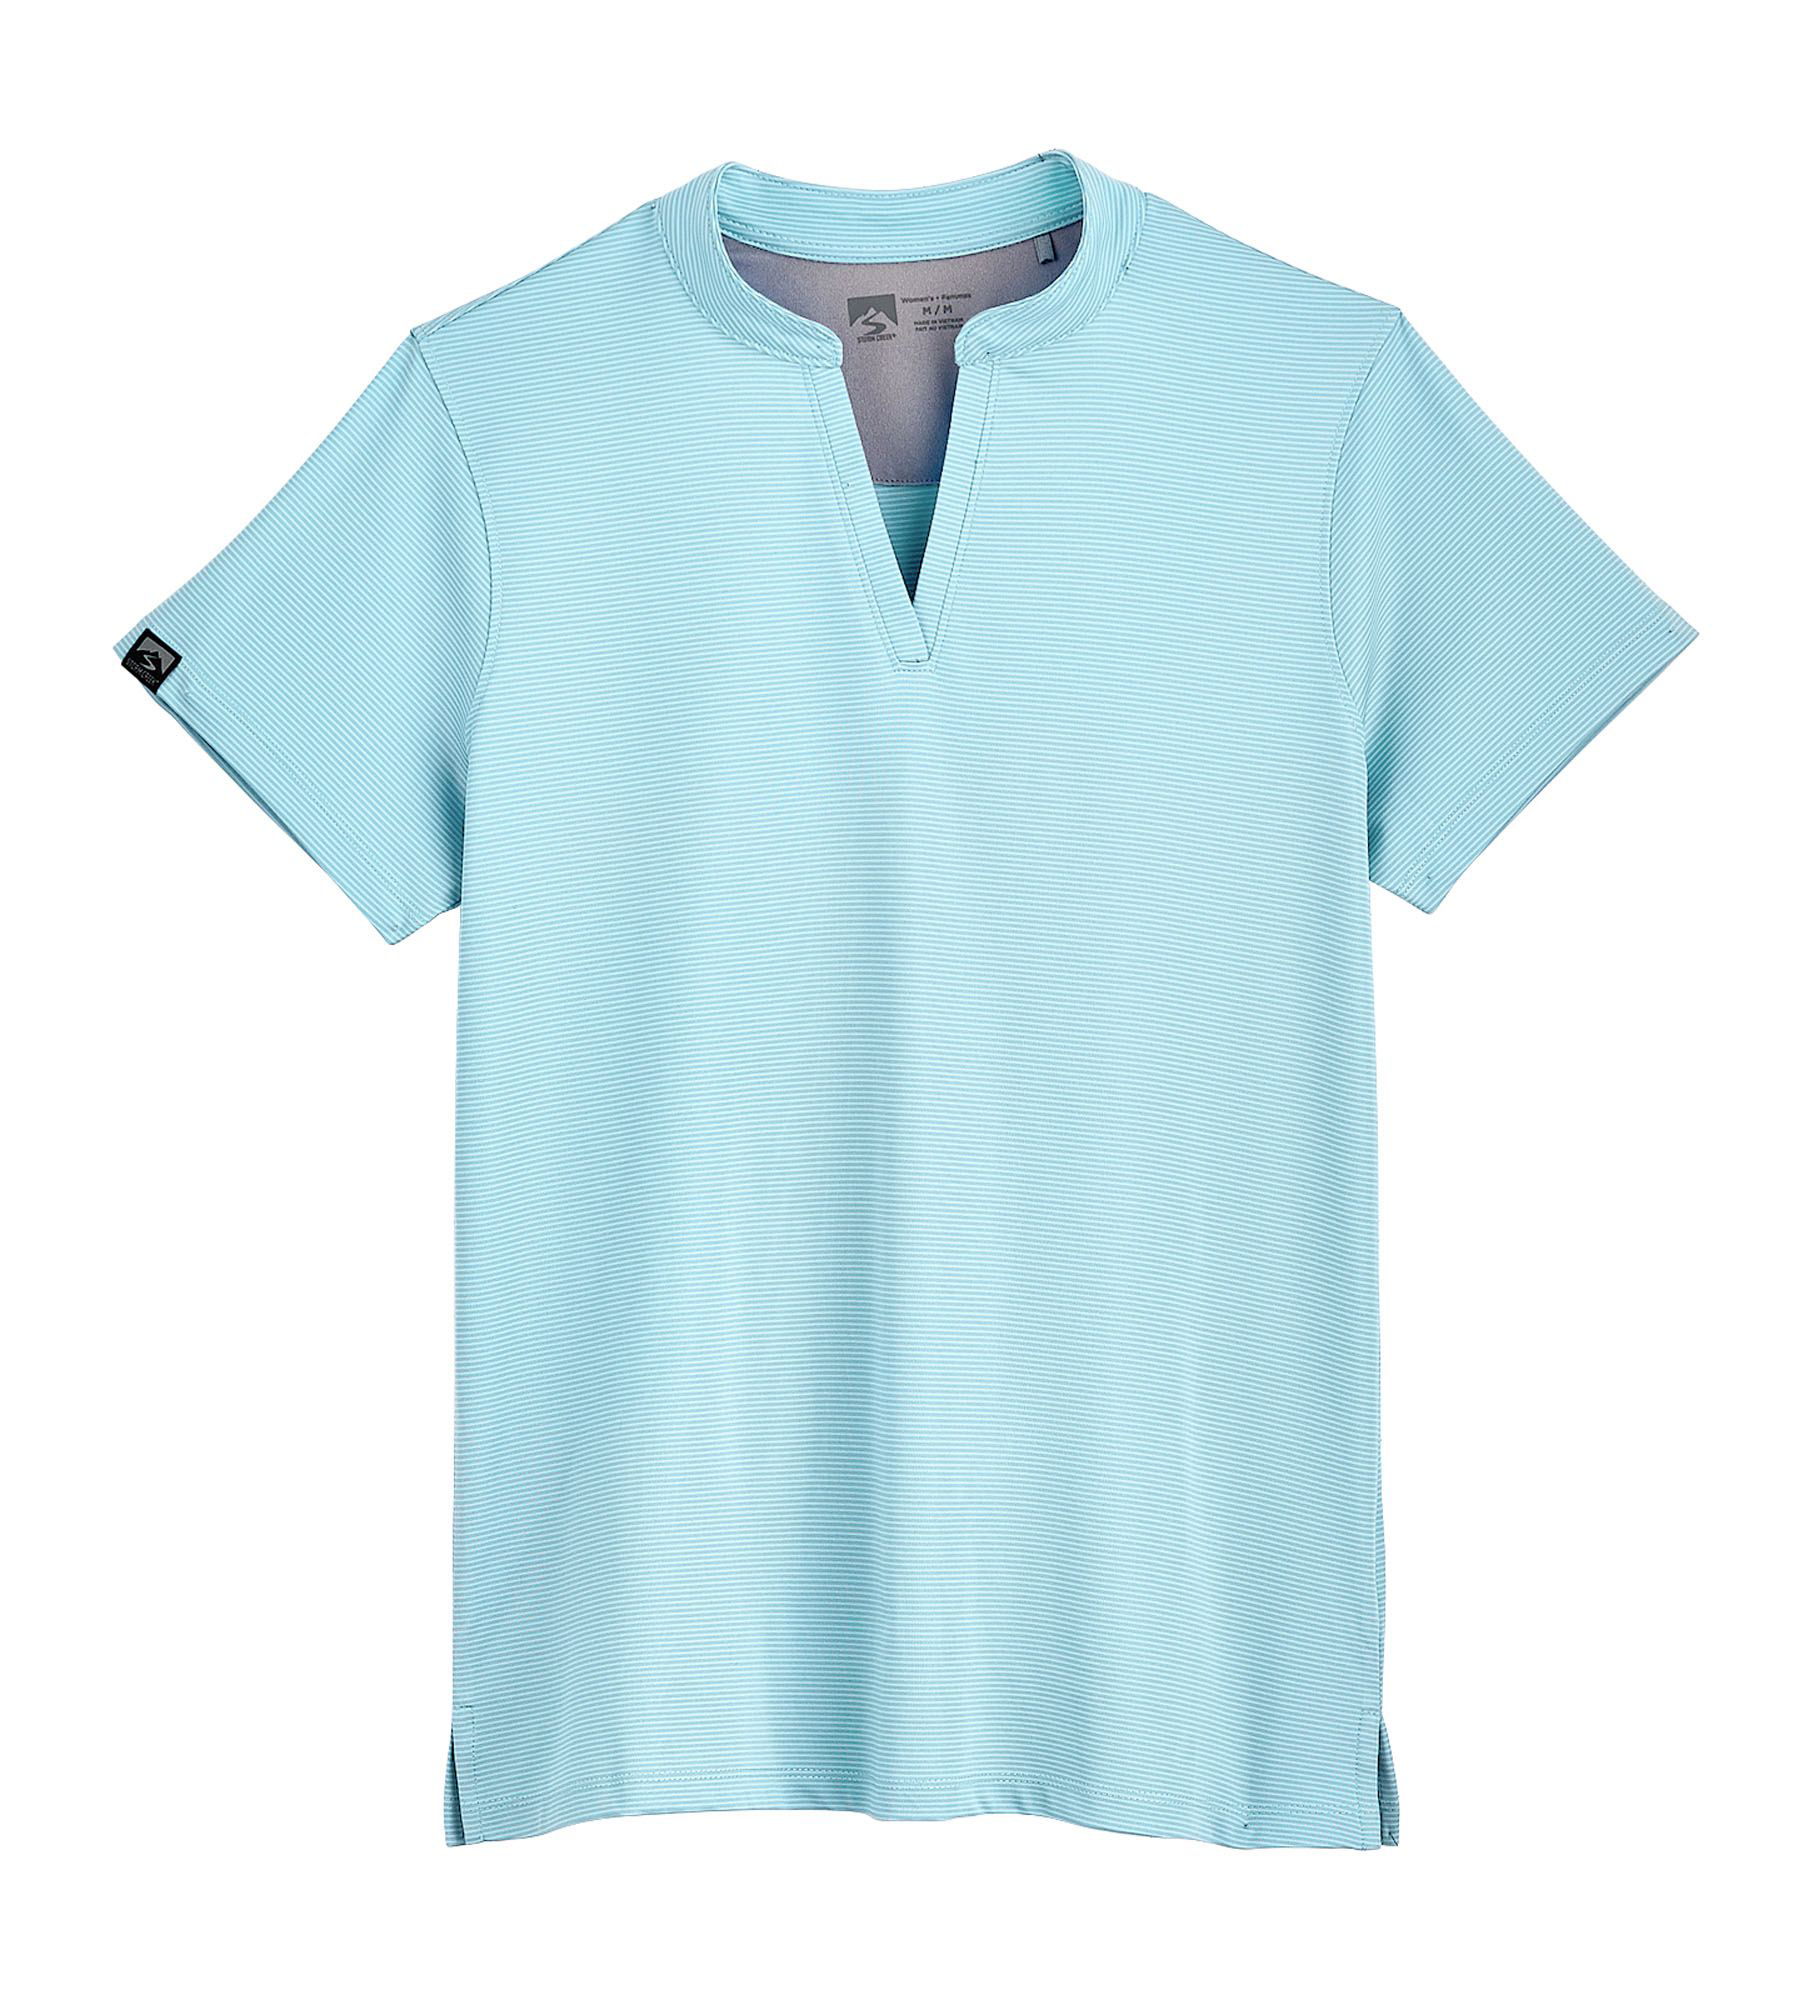 Storm Creek Optimist Short-Sleeve Polo Shirt for Ladies - Glacier Blue - 2XL